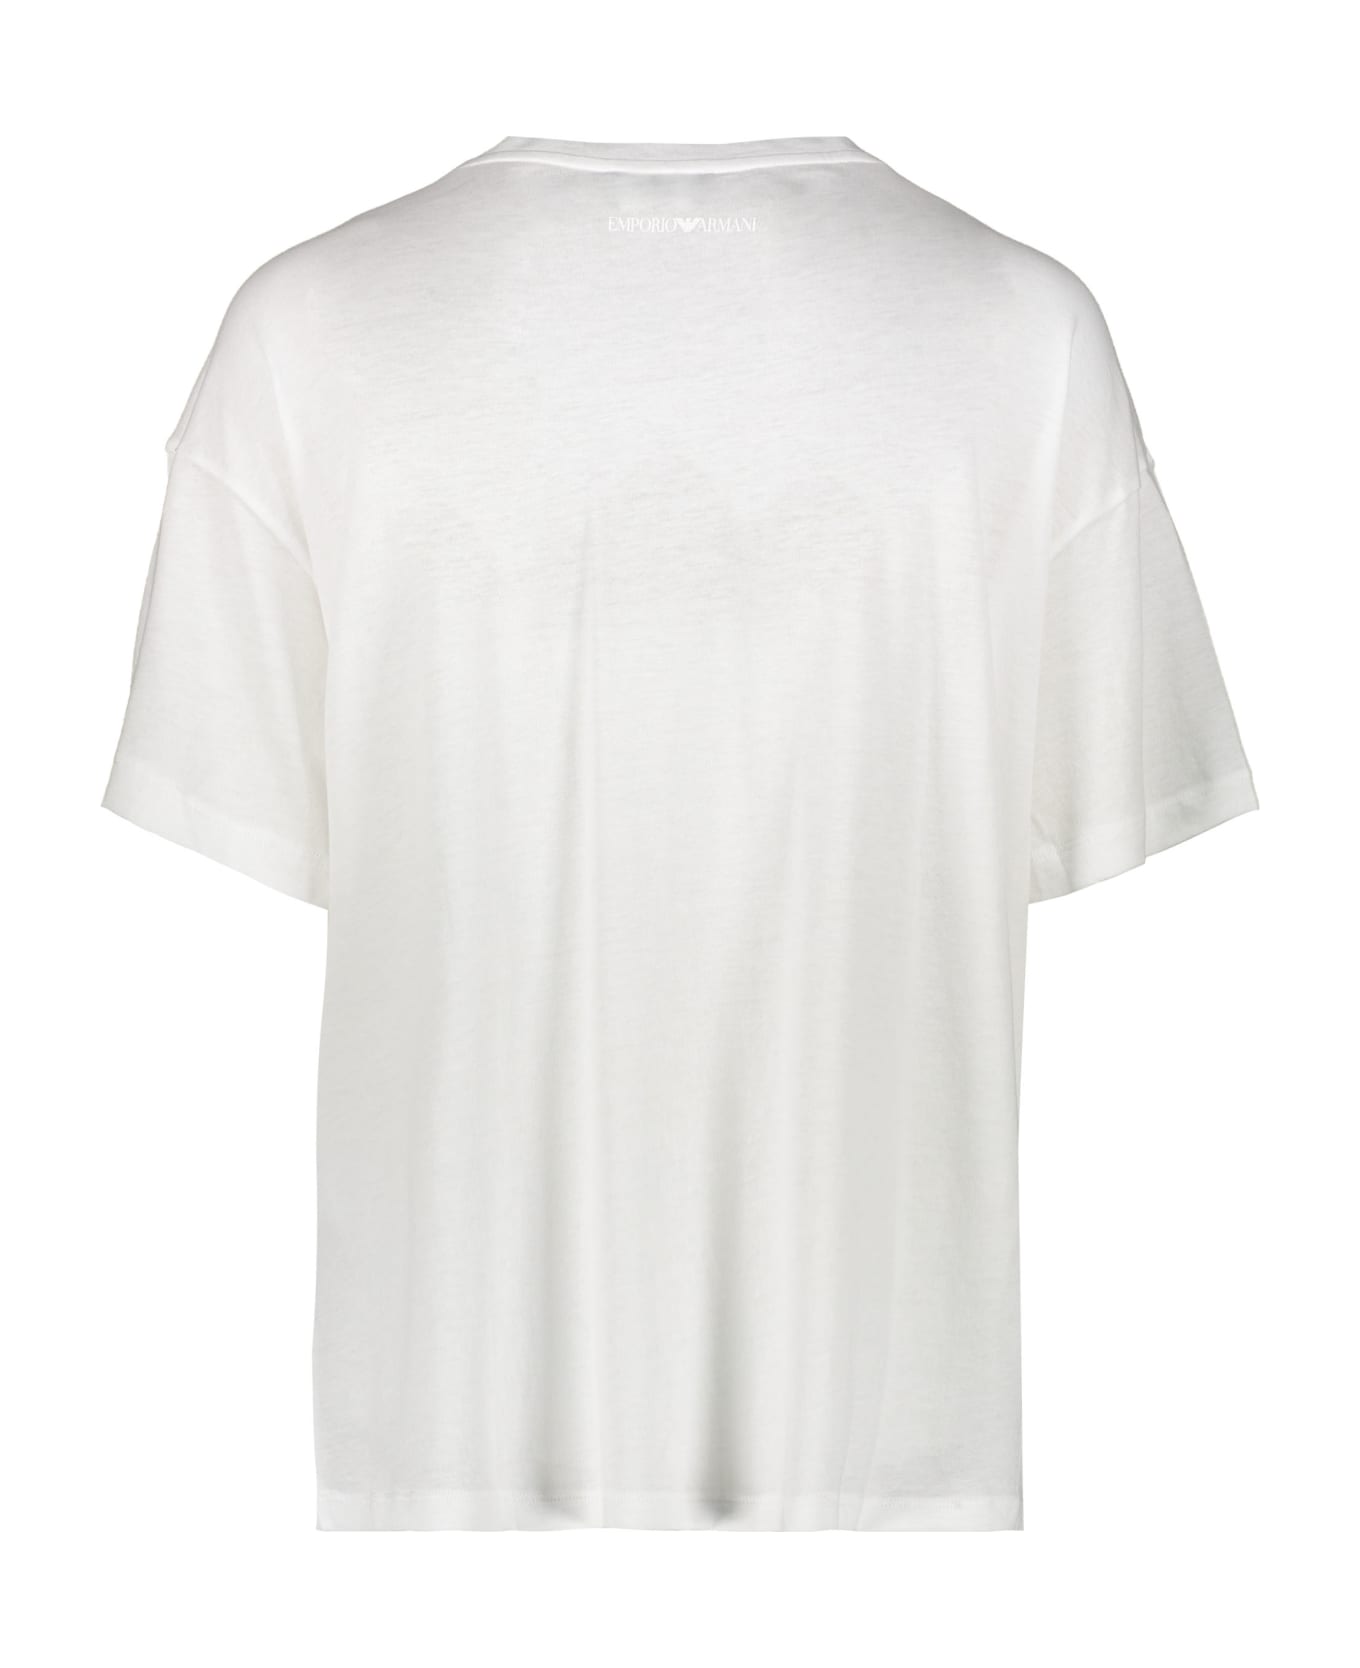 Emporio Armani Printed T-shirt - White